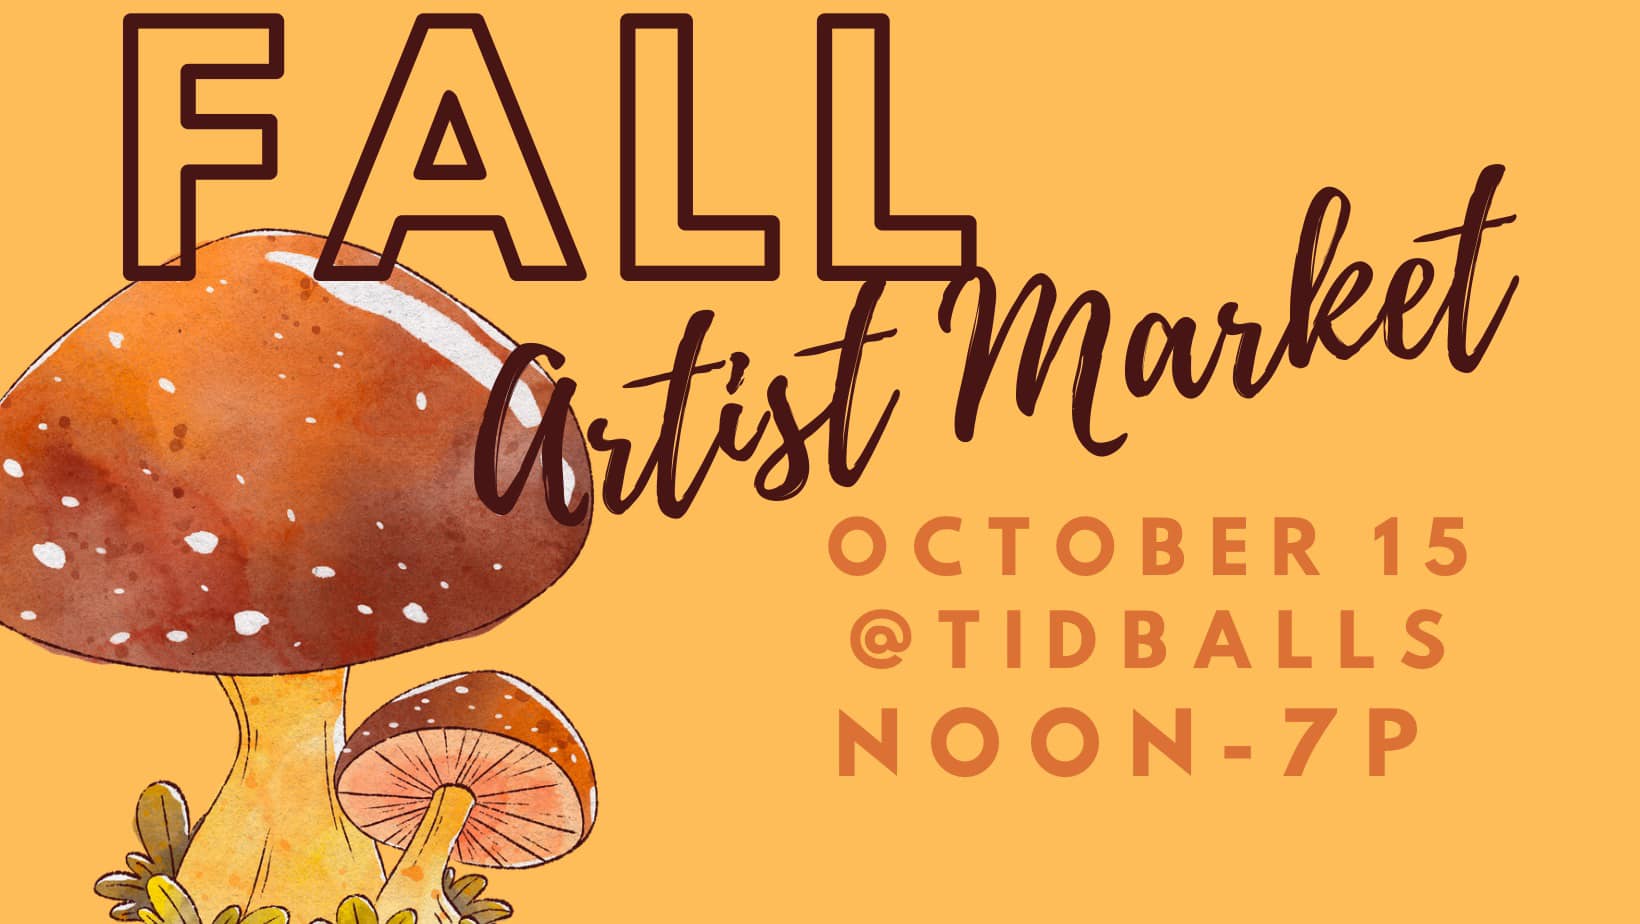 Fall Artist Market